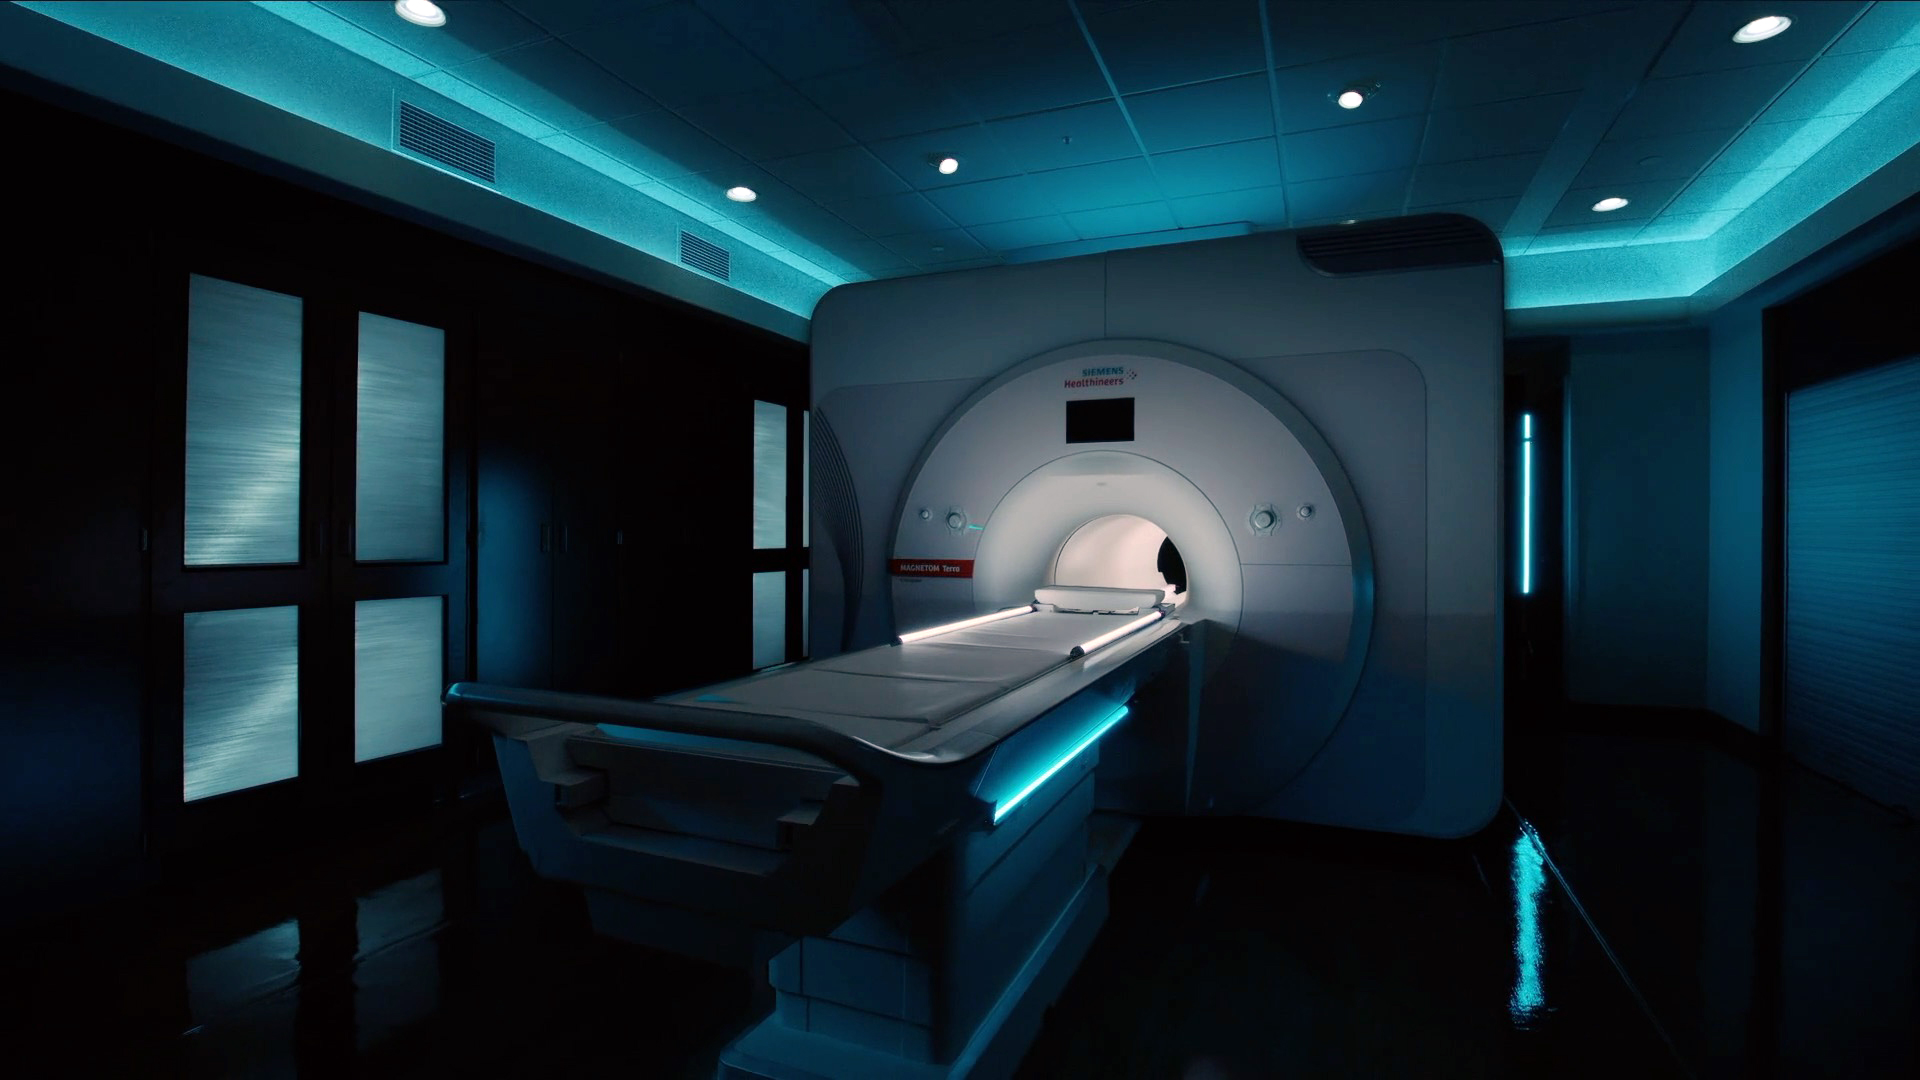 7T MRI Scanner